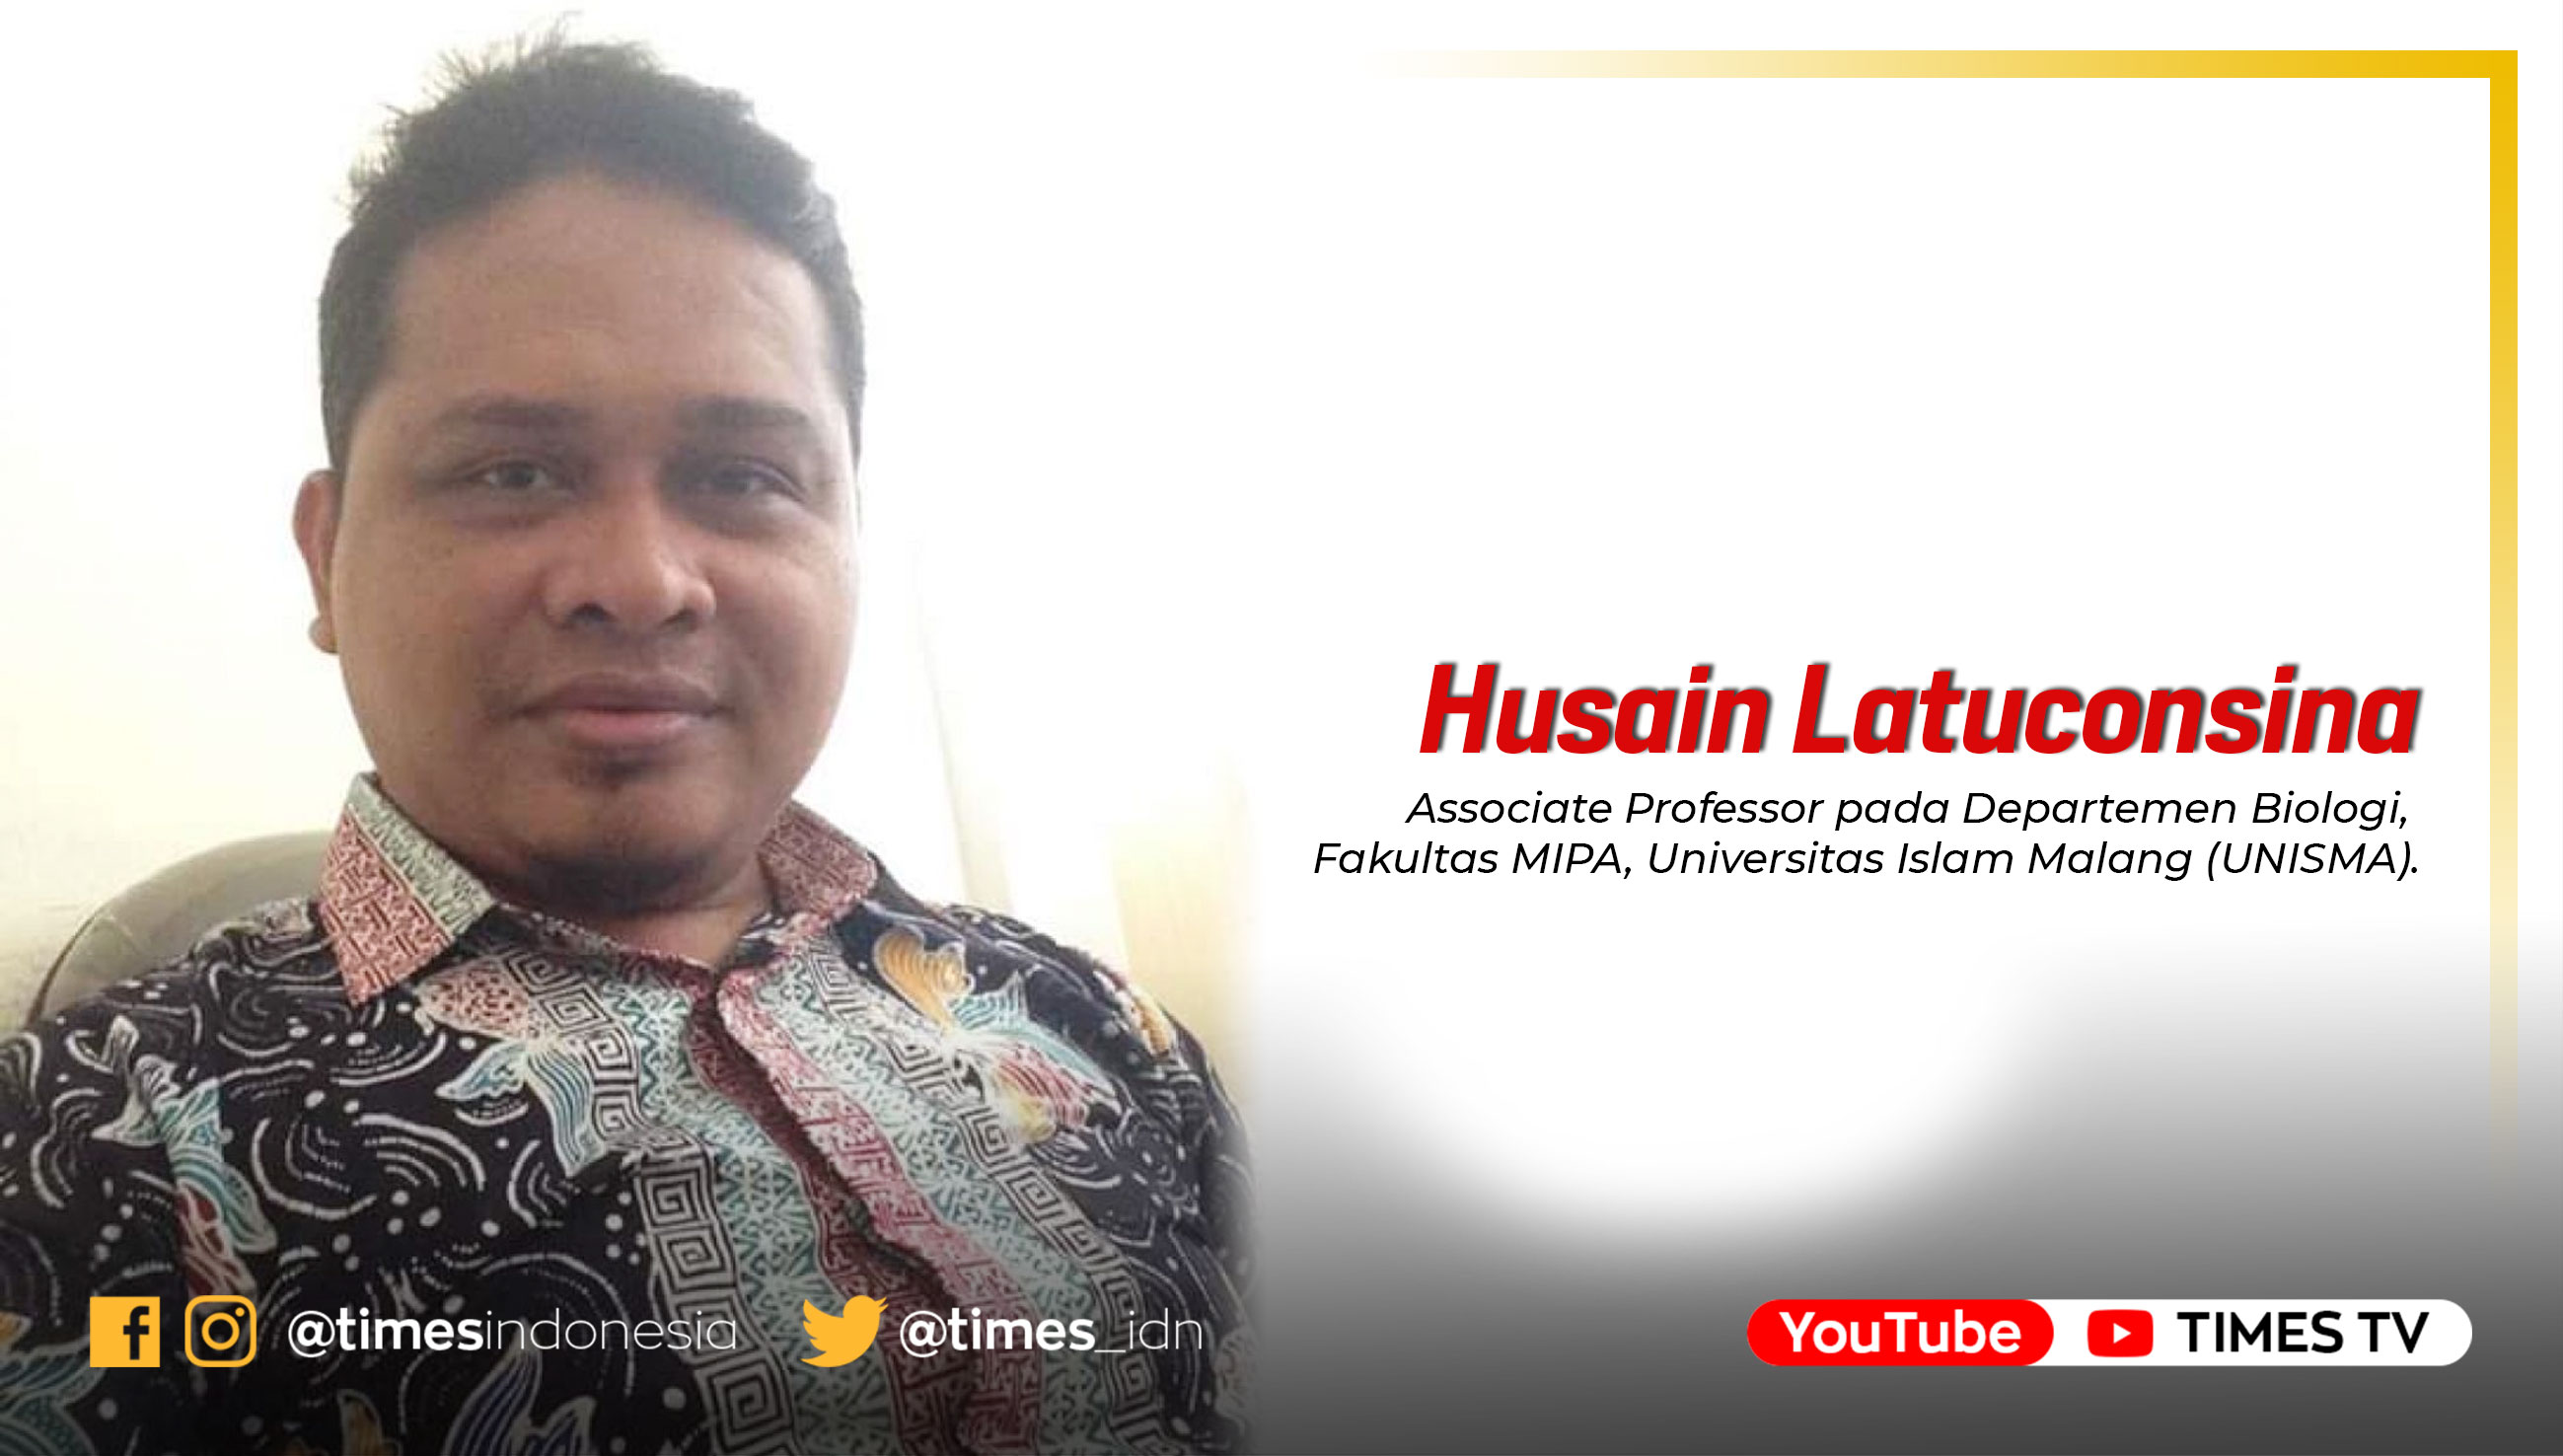 Husain Latuconsina, Associate Professor pada Departemen Biologi, Fakultas MIPA, Universitas Islam Malang (UNISMA).